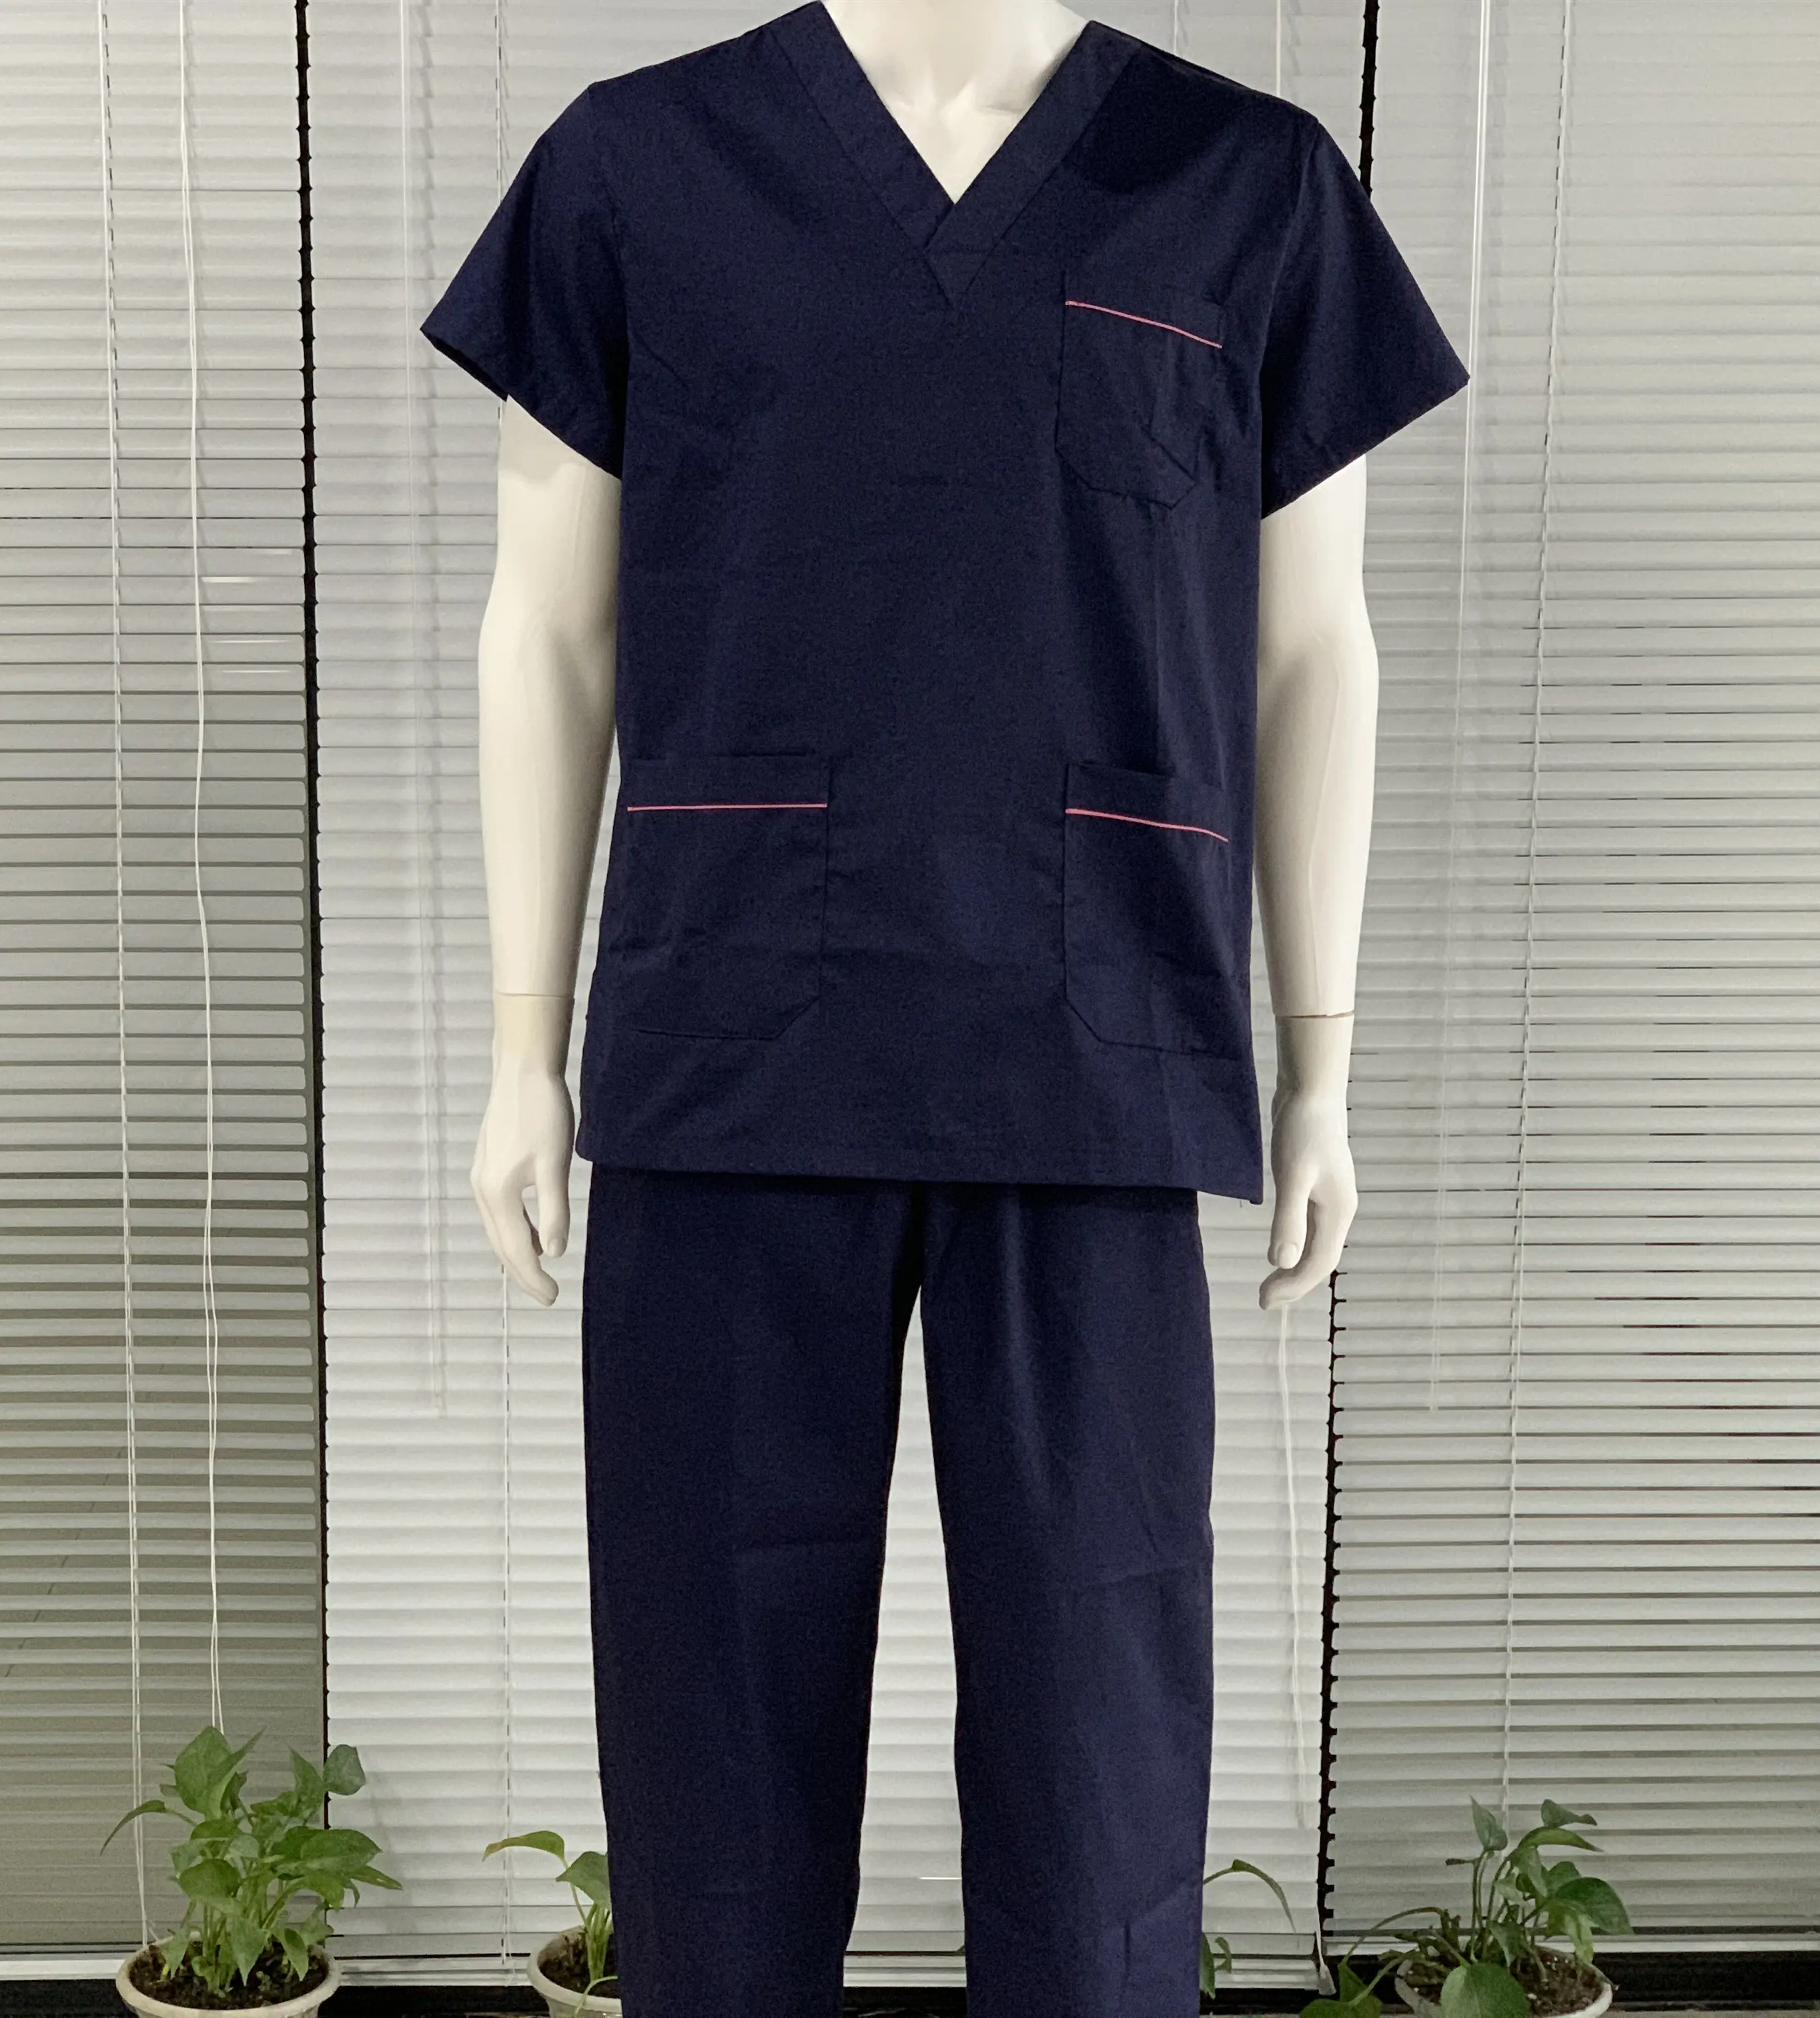 Nurse Scrub Suits Functional Healthcare Nurse Scrubs Hospital Uniform Medical Uniform Scrubs Suits